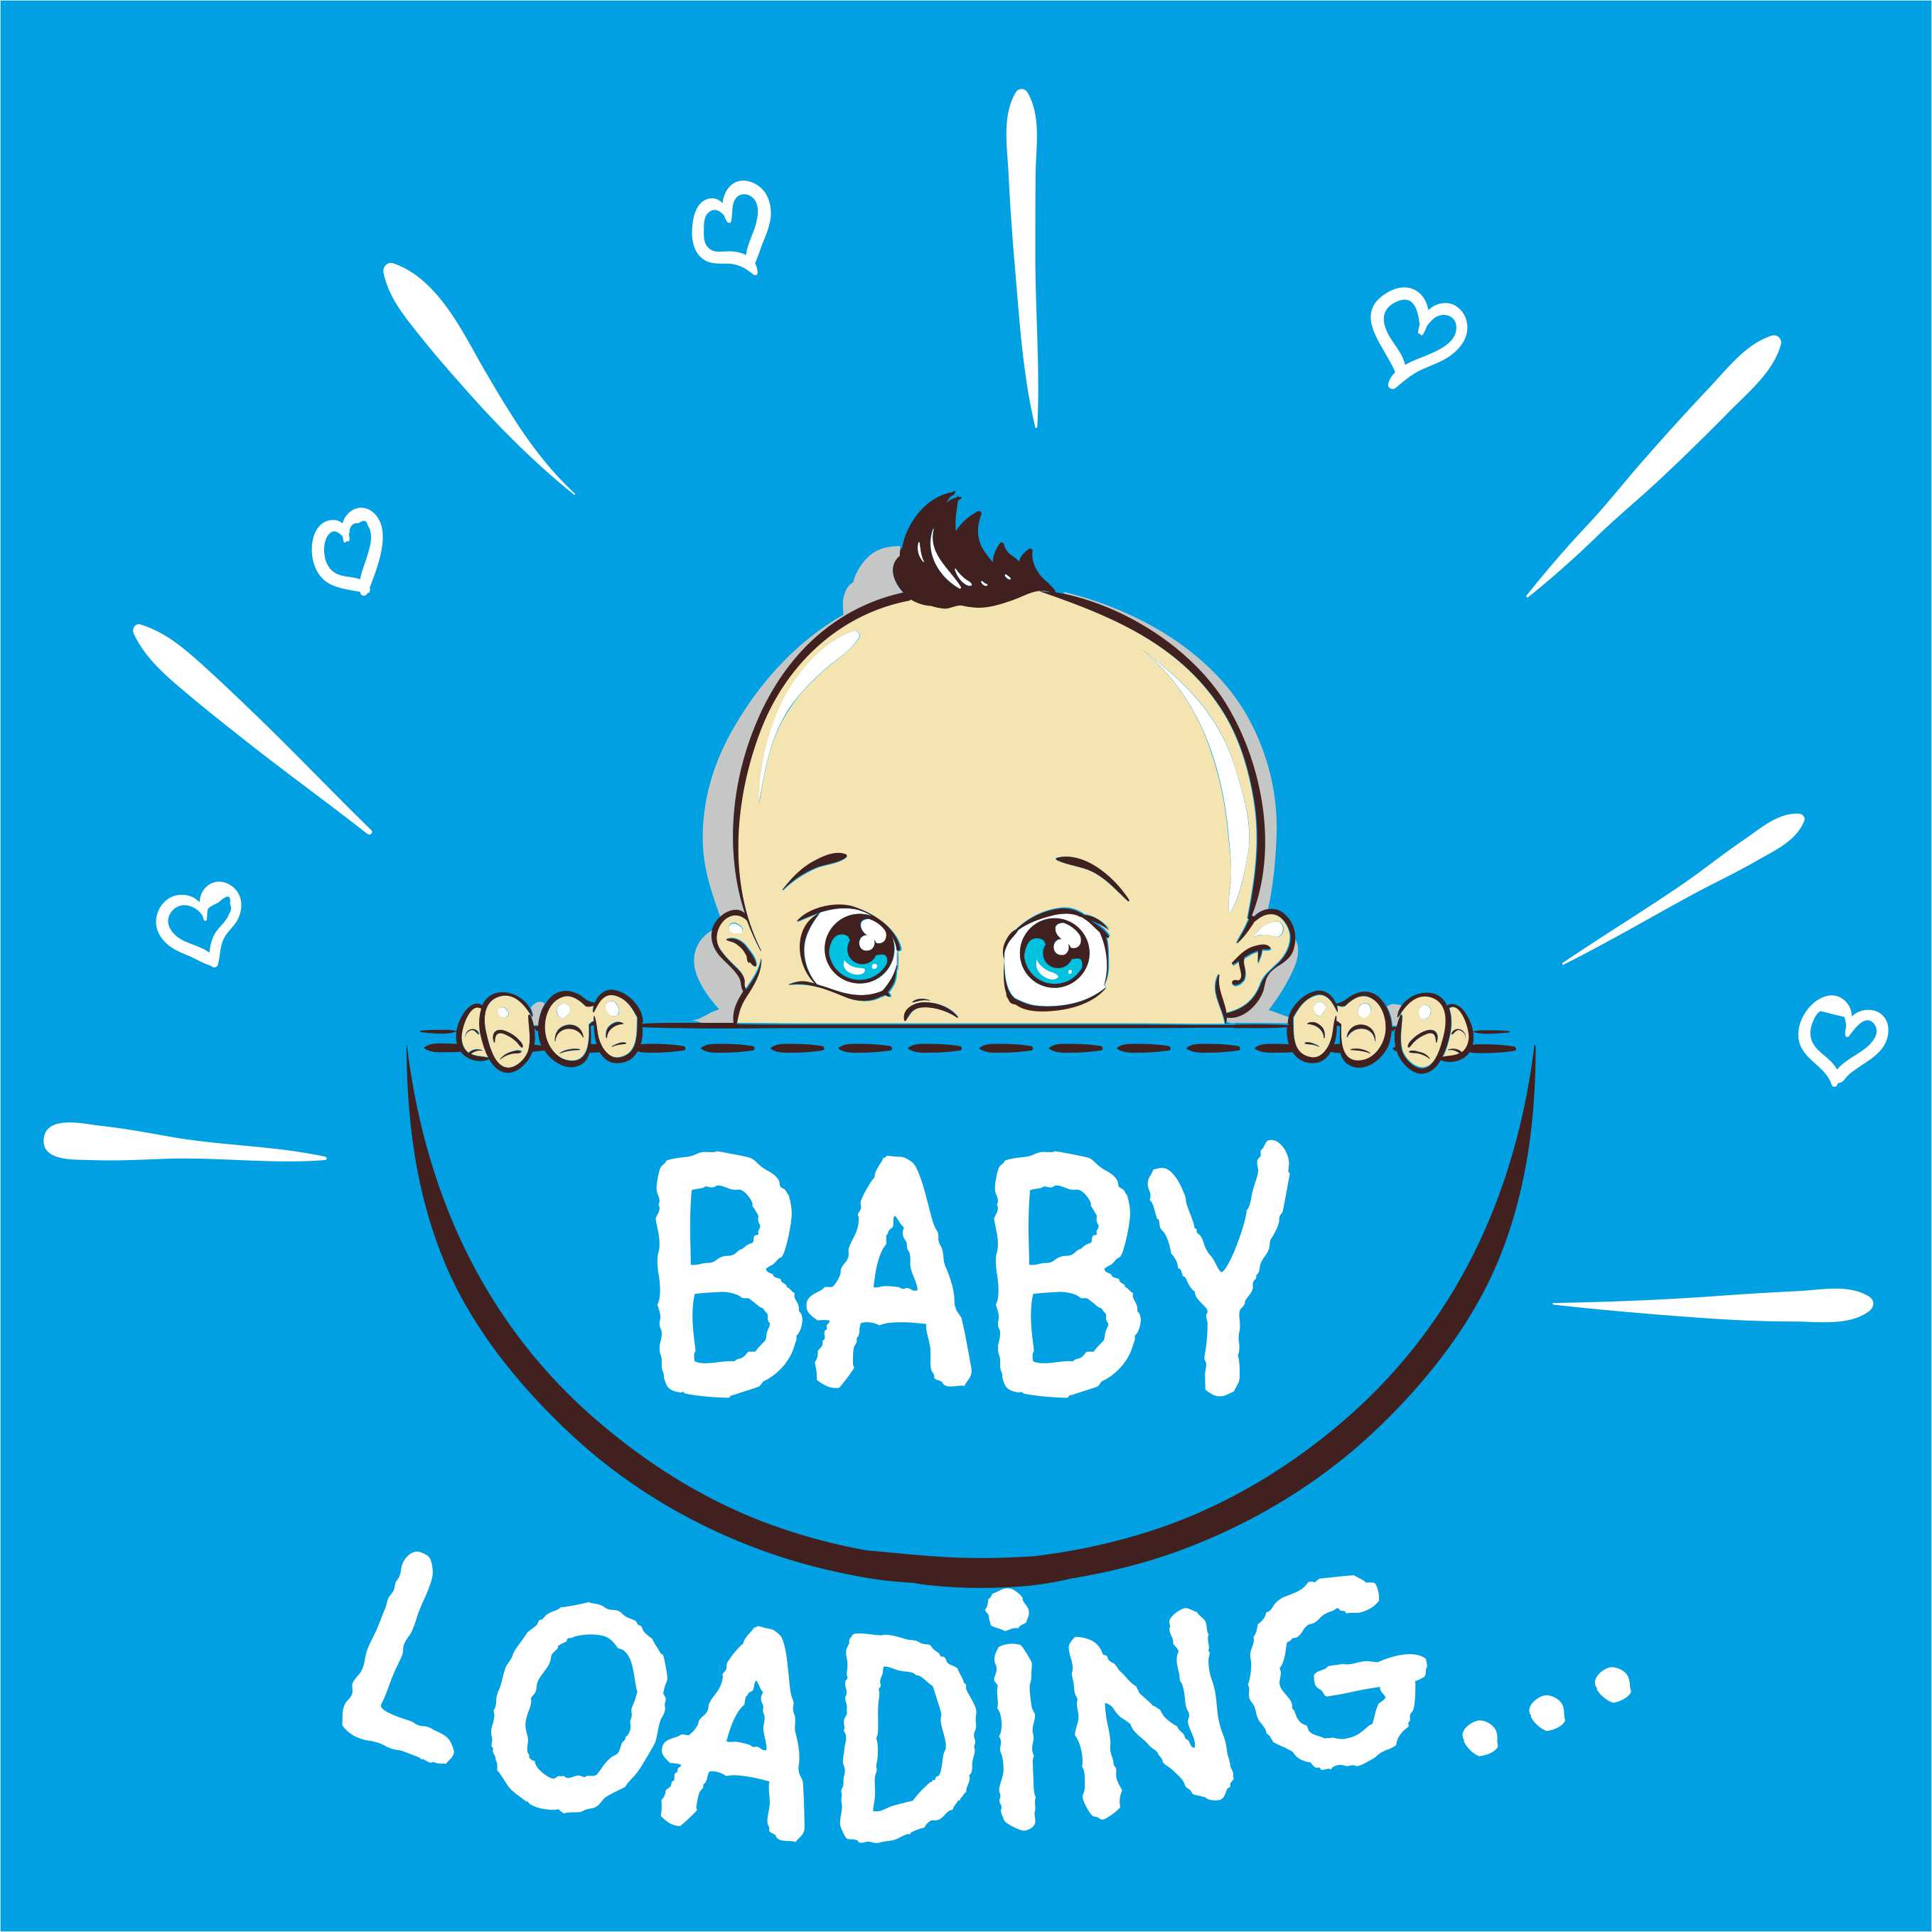 Baby loading ...